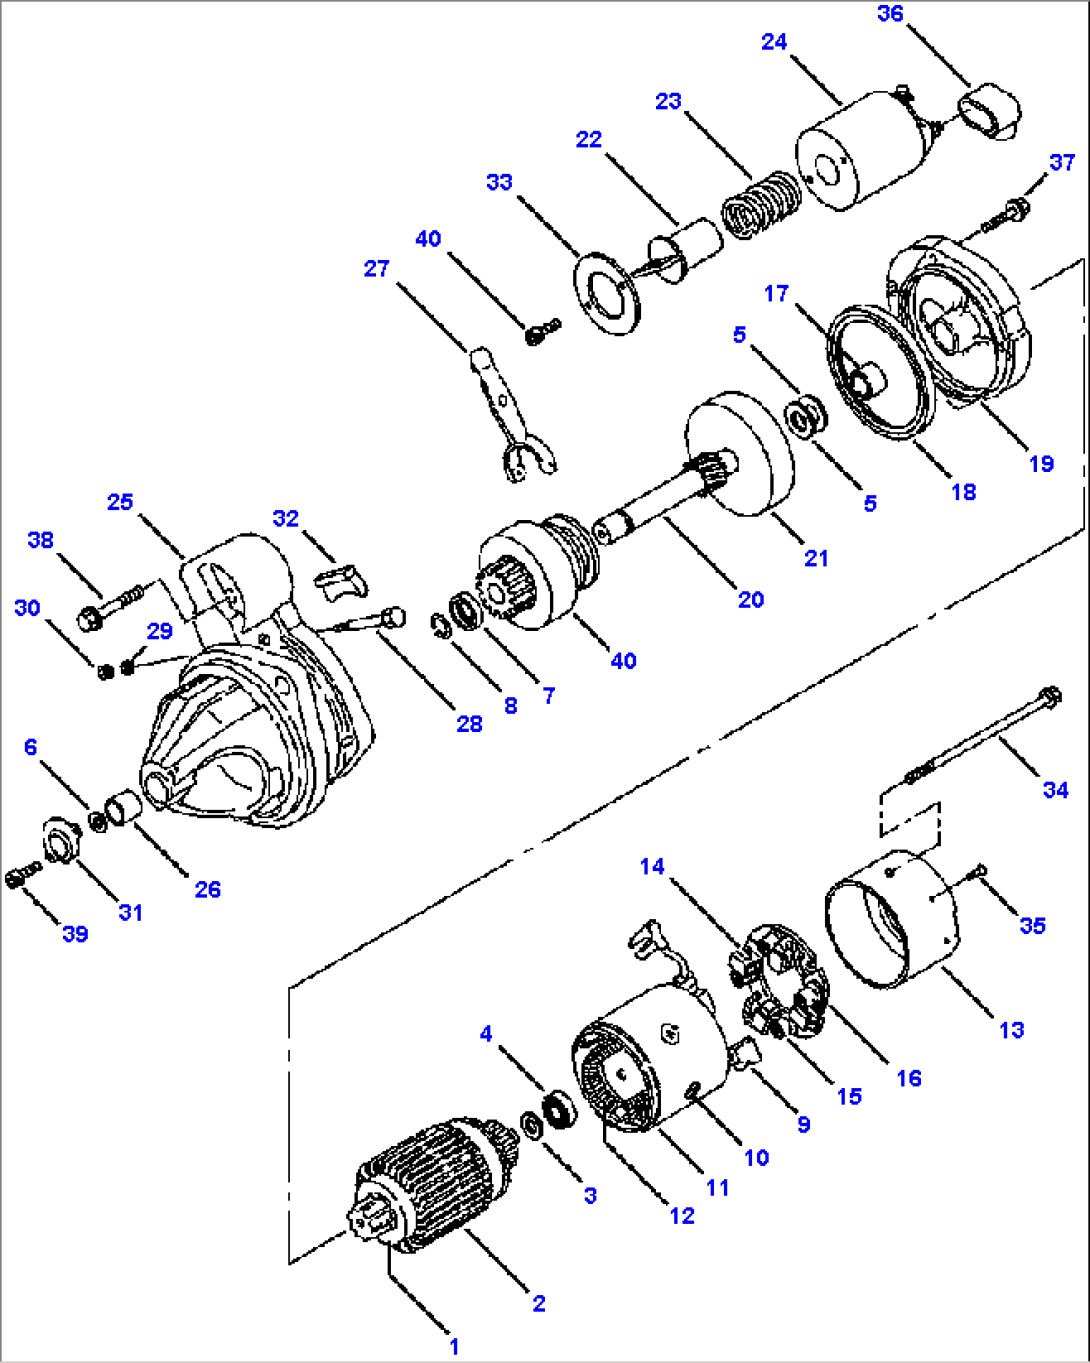 FIG. A0151-01A2 TIER II ENGINE - STARTER MOTOR